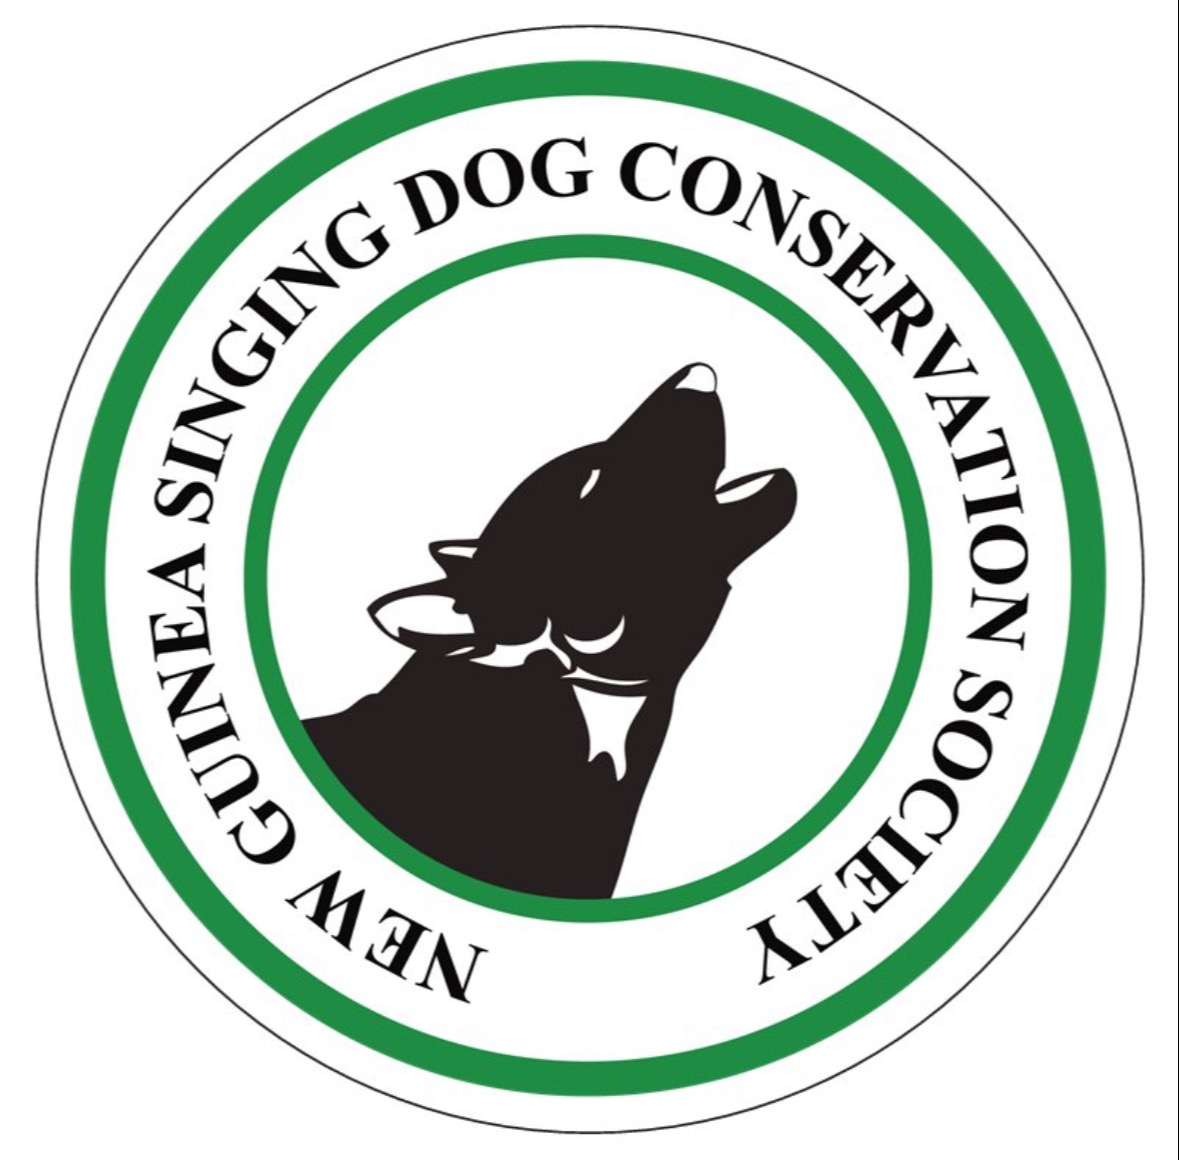 The New Guinea Singing Dog Conservation Society logo